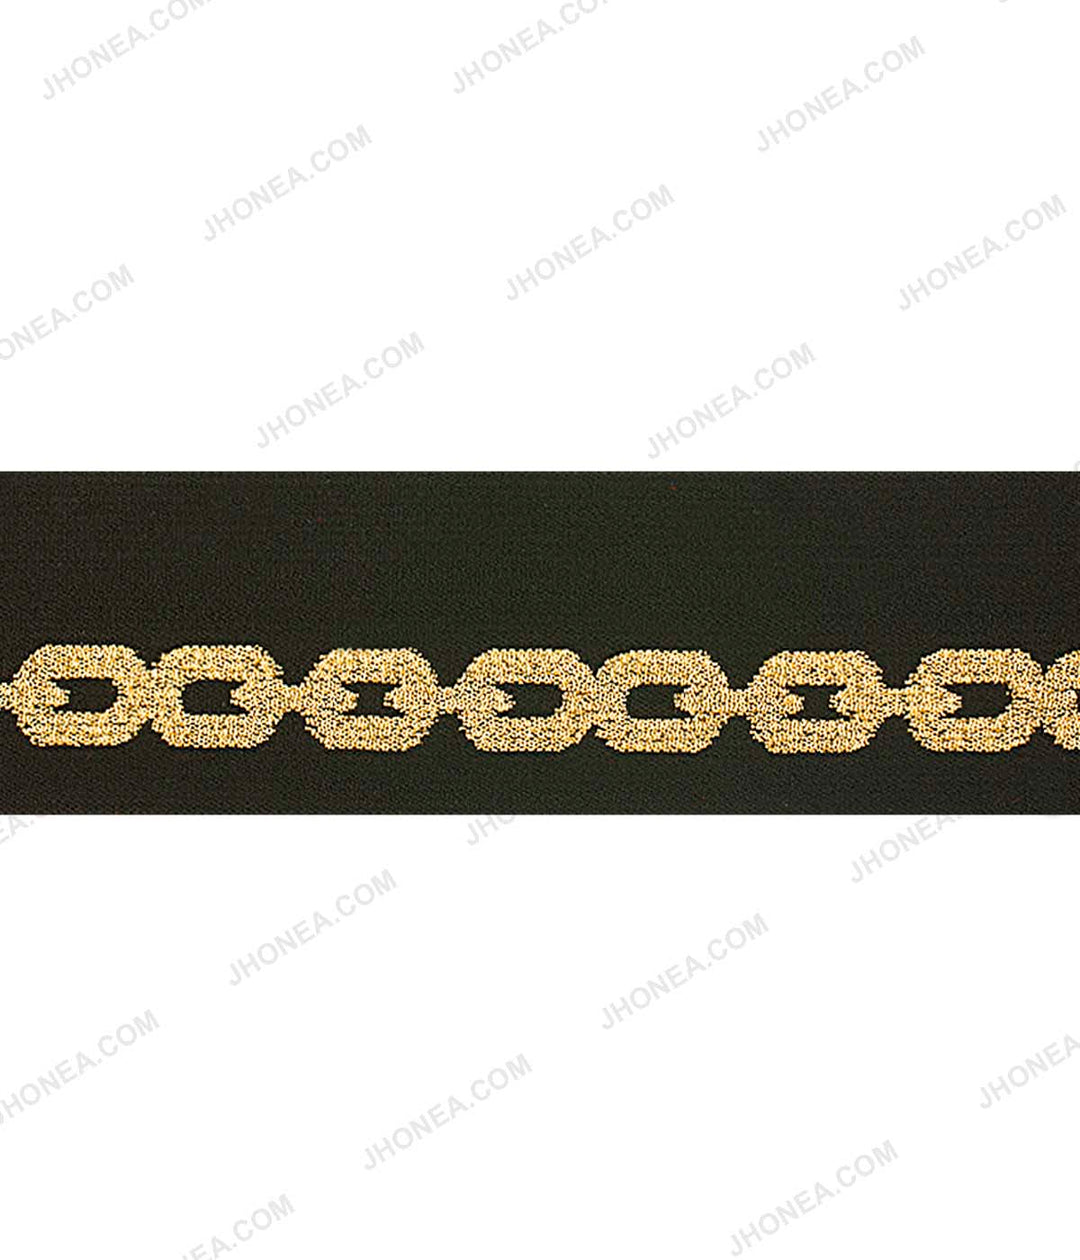 Black with Shiny Metallic Gold Lurex Thread Chain Design Glitter Elastic